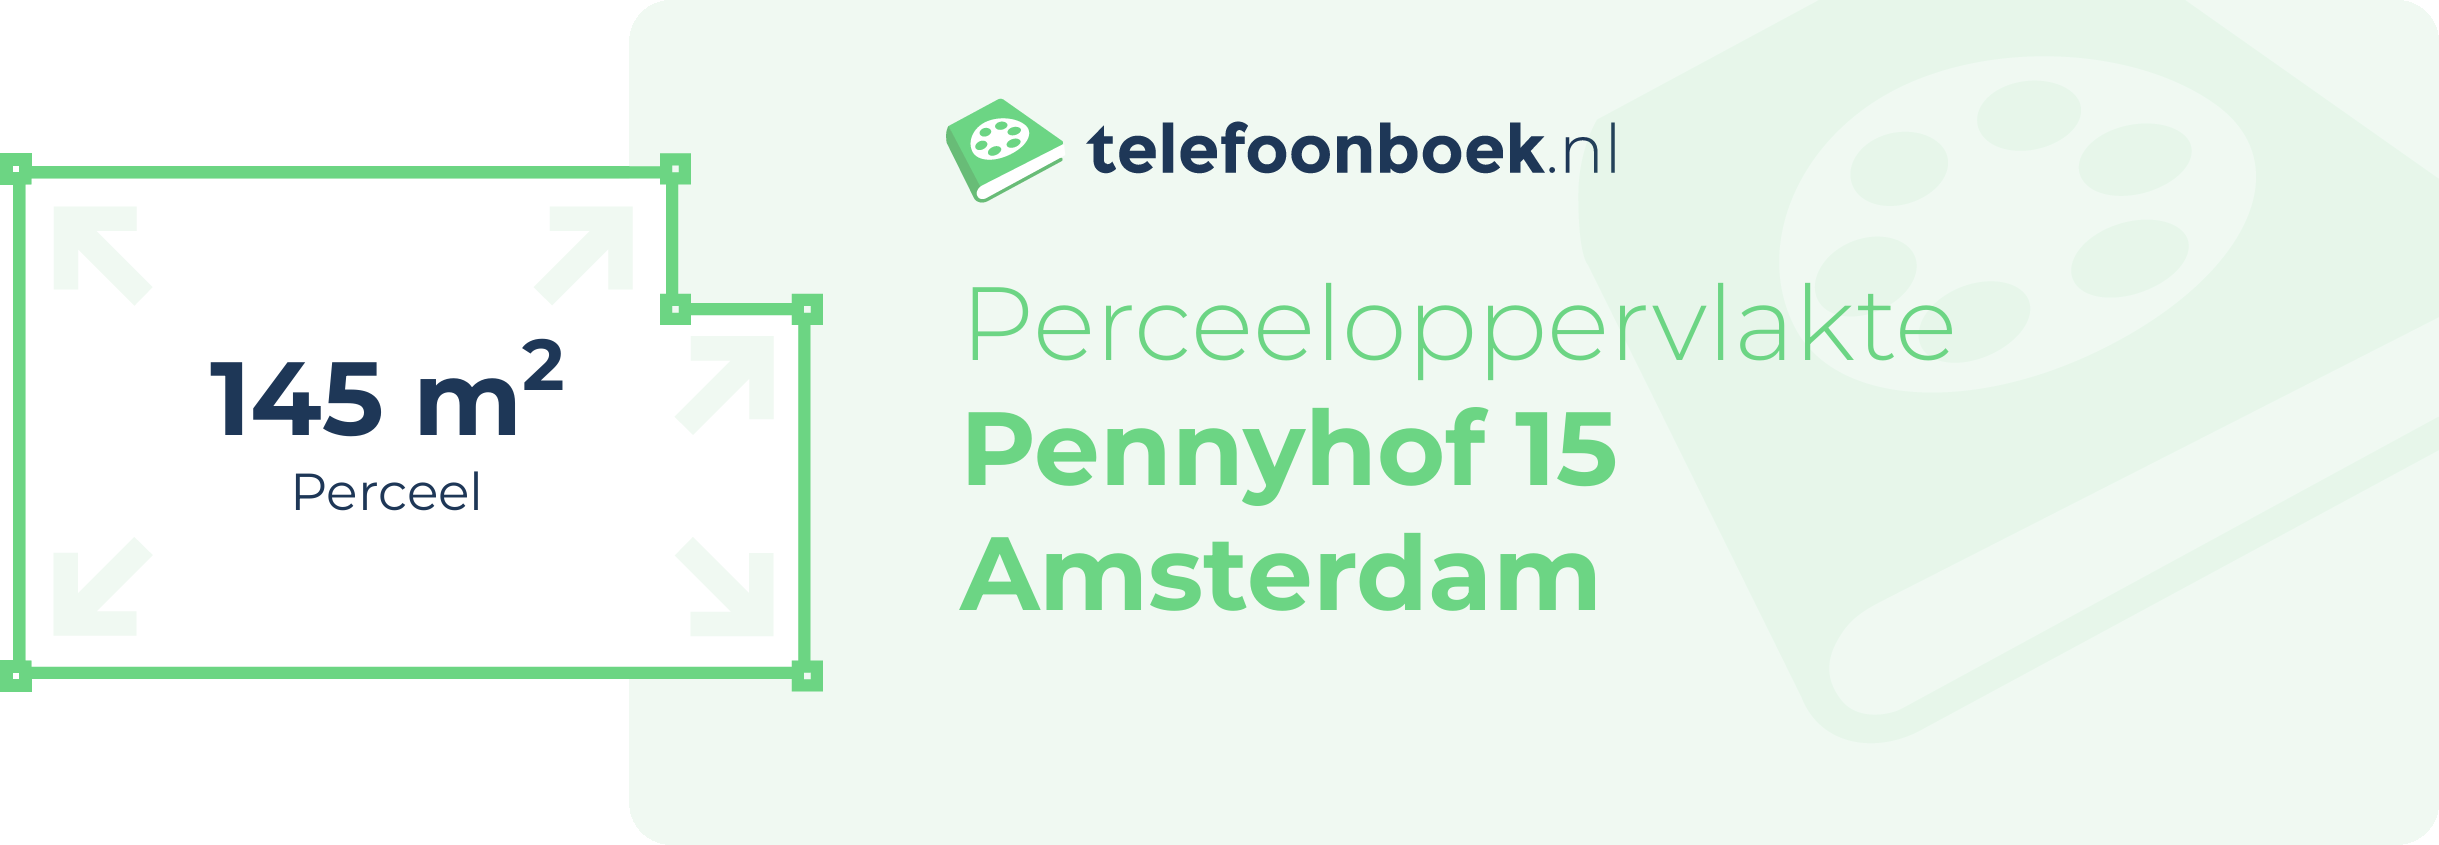 Perceeloppervlakte Pennyhof 15 Amsterdam